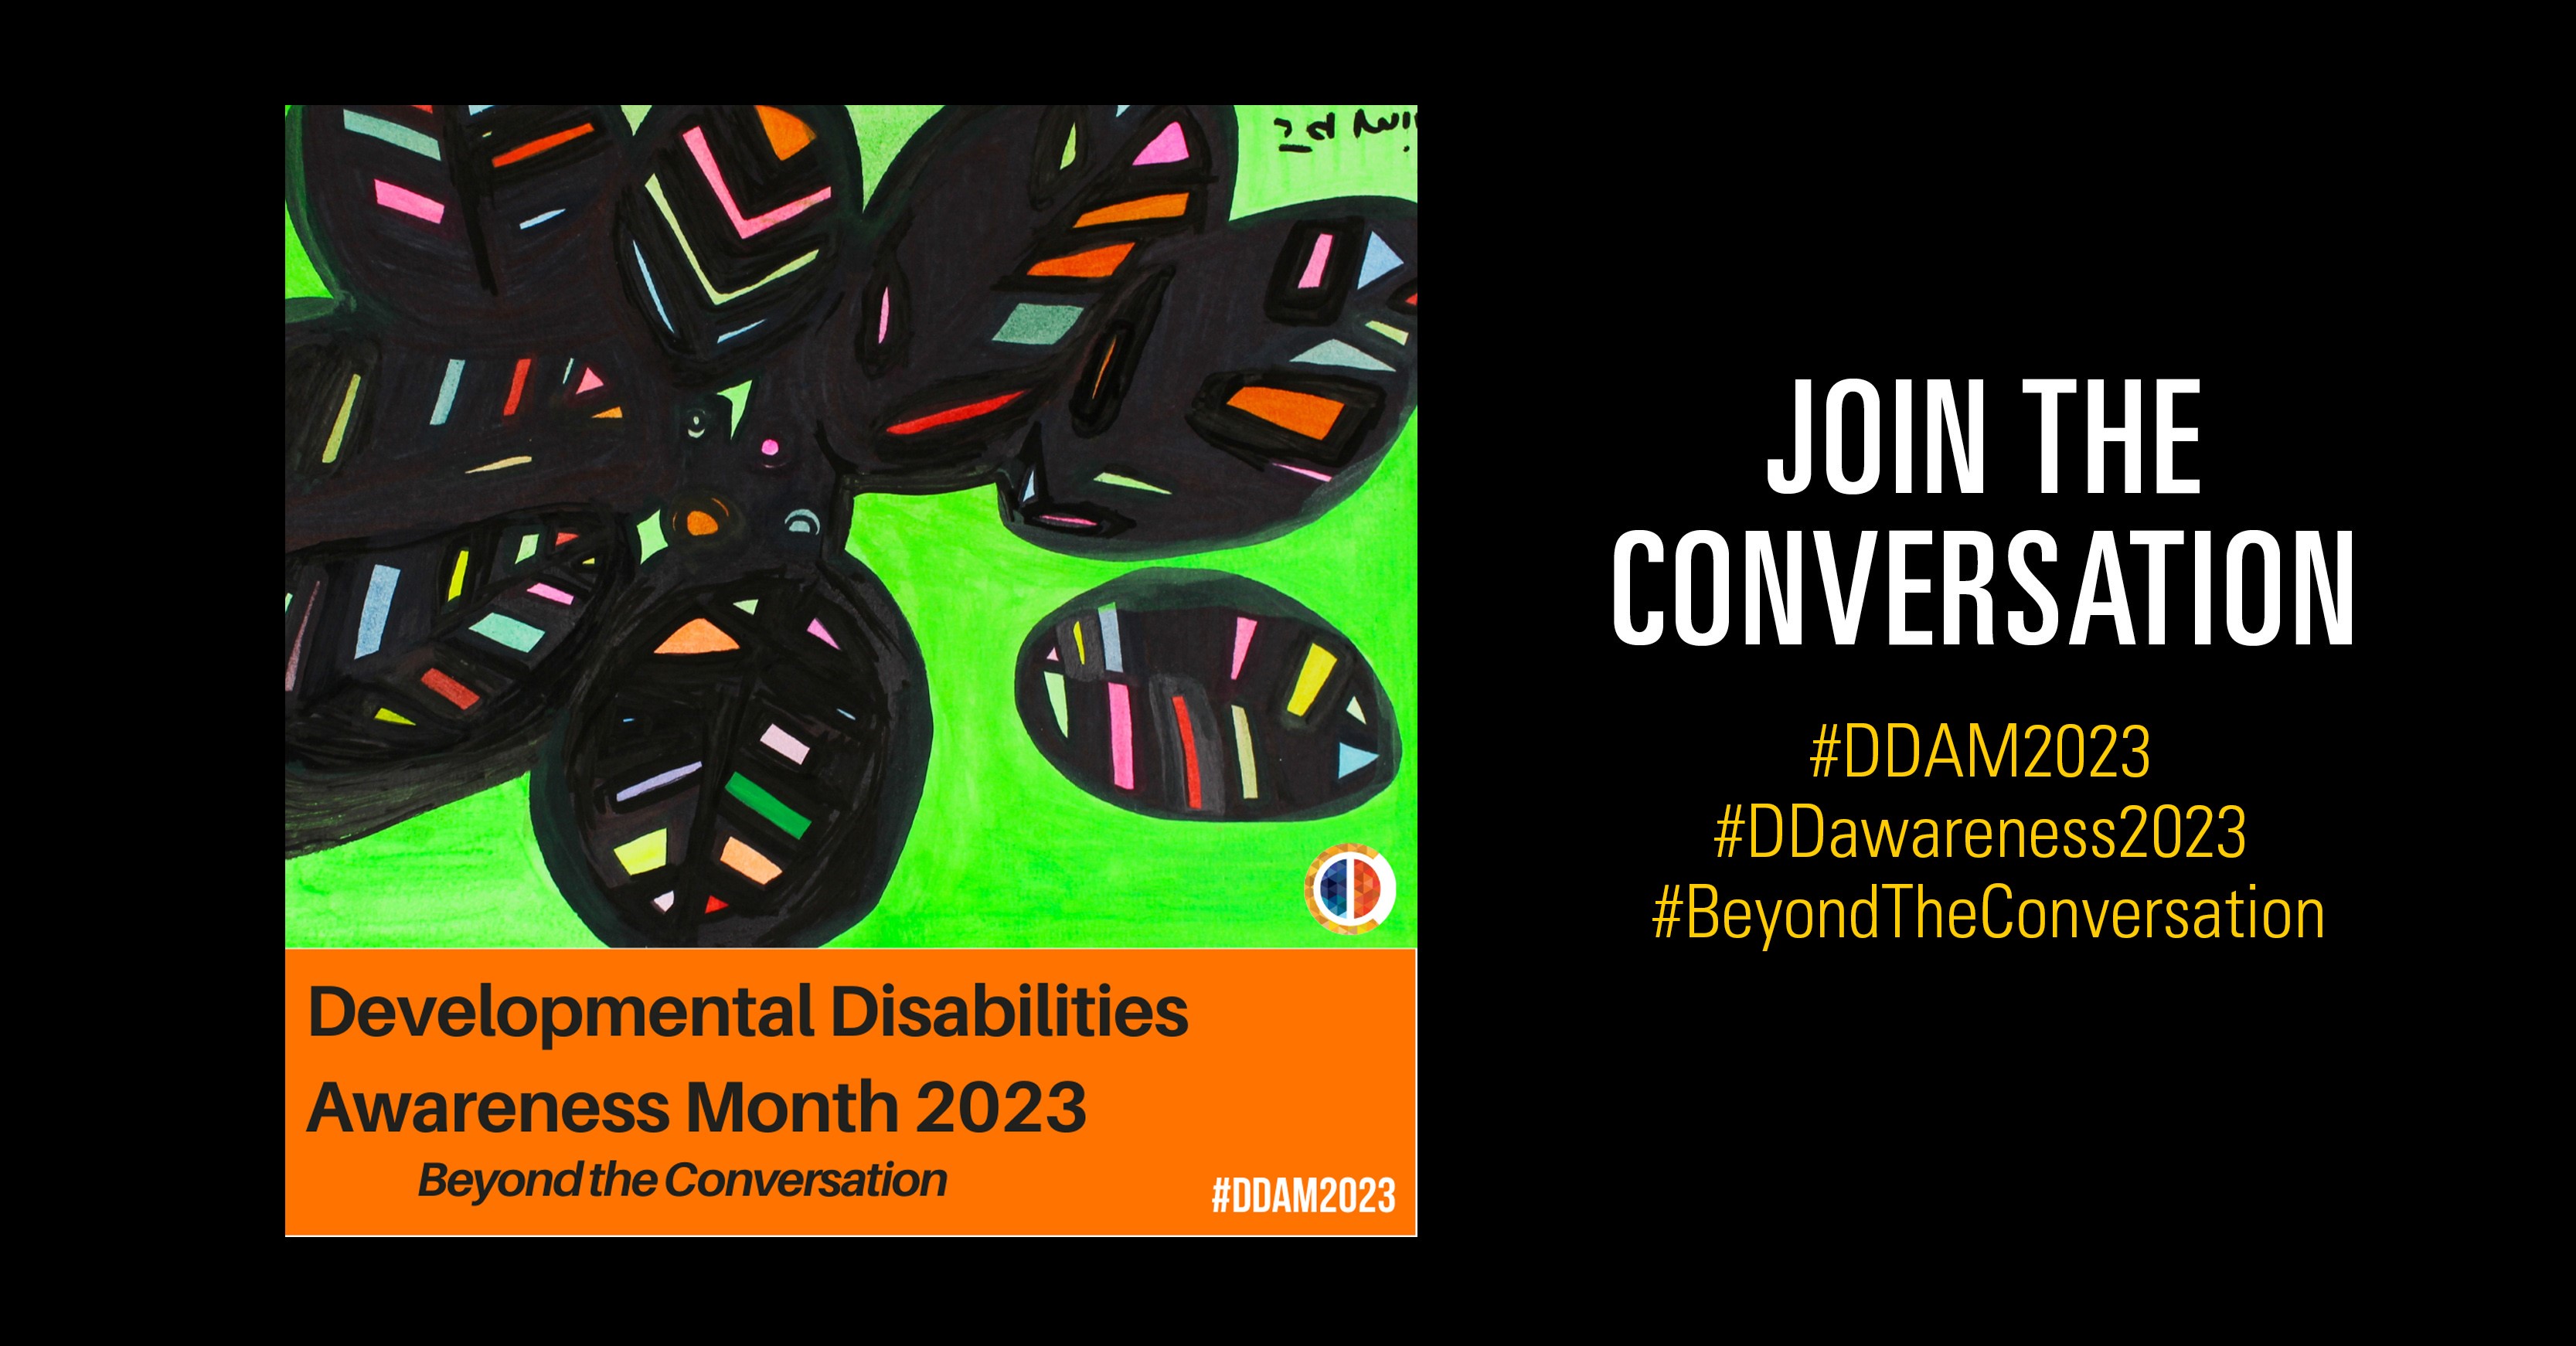 Join the conversation. Developmental Disabilities Awareness Month 2023, Beyond the Conversation. #DDAM2023, #DDAwareness2023, #BeyondTheConversation